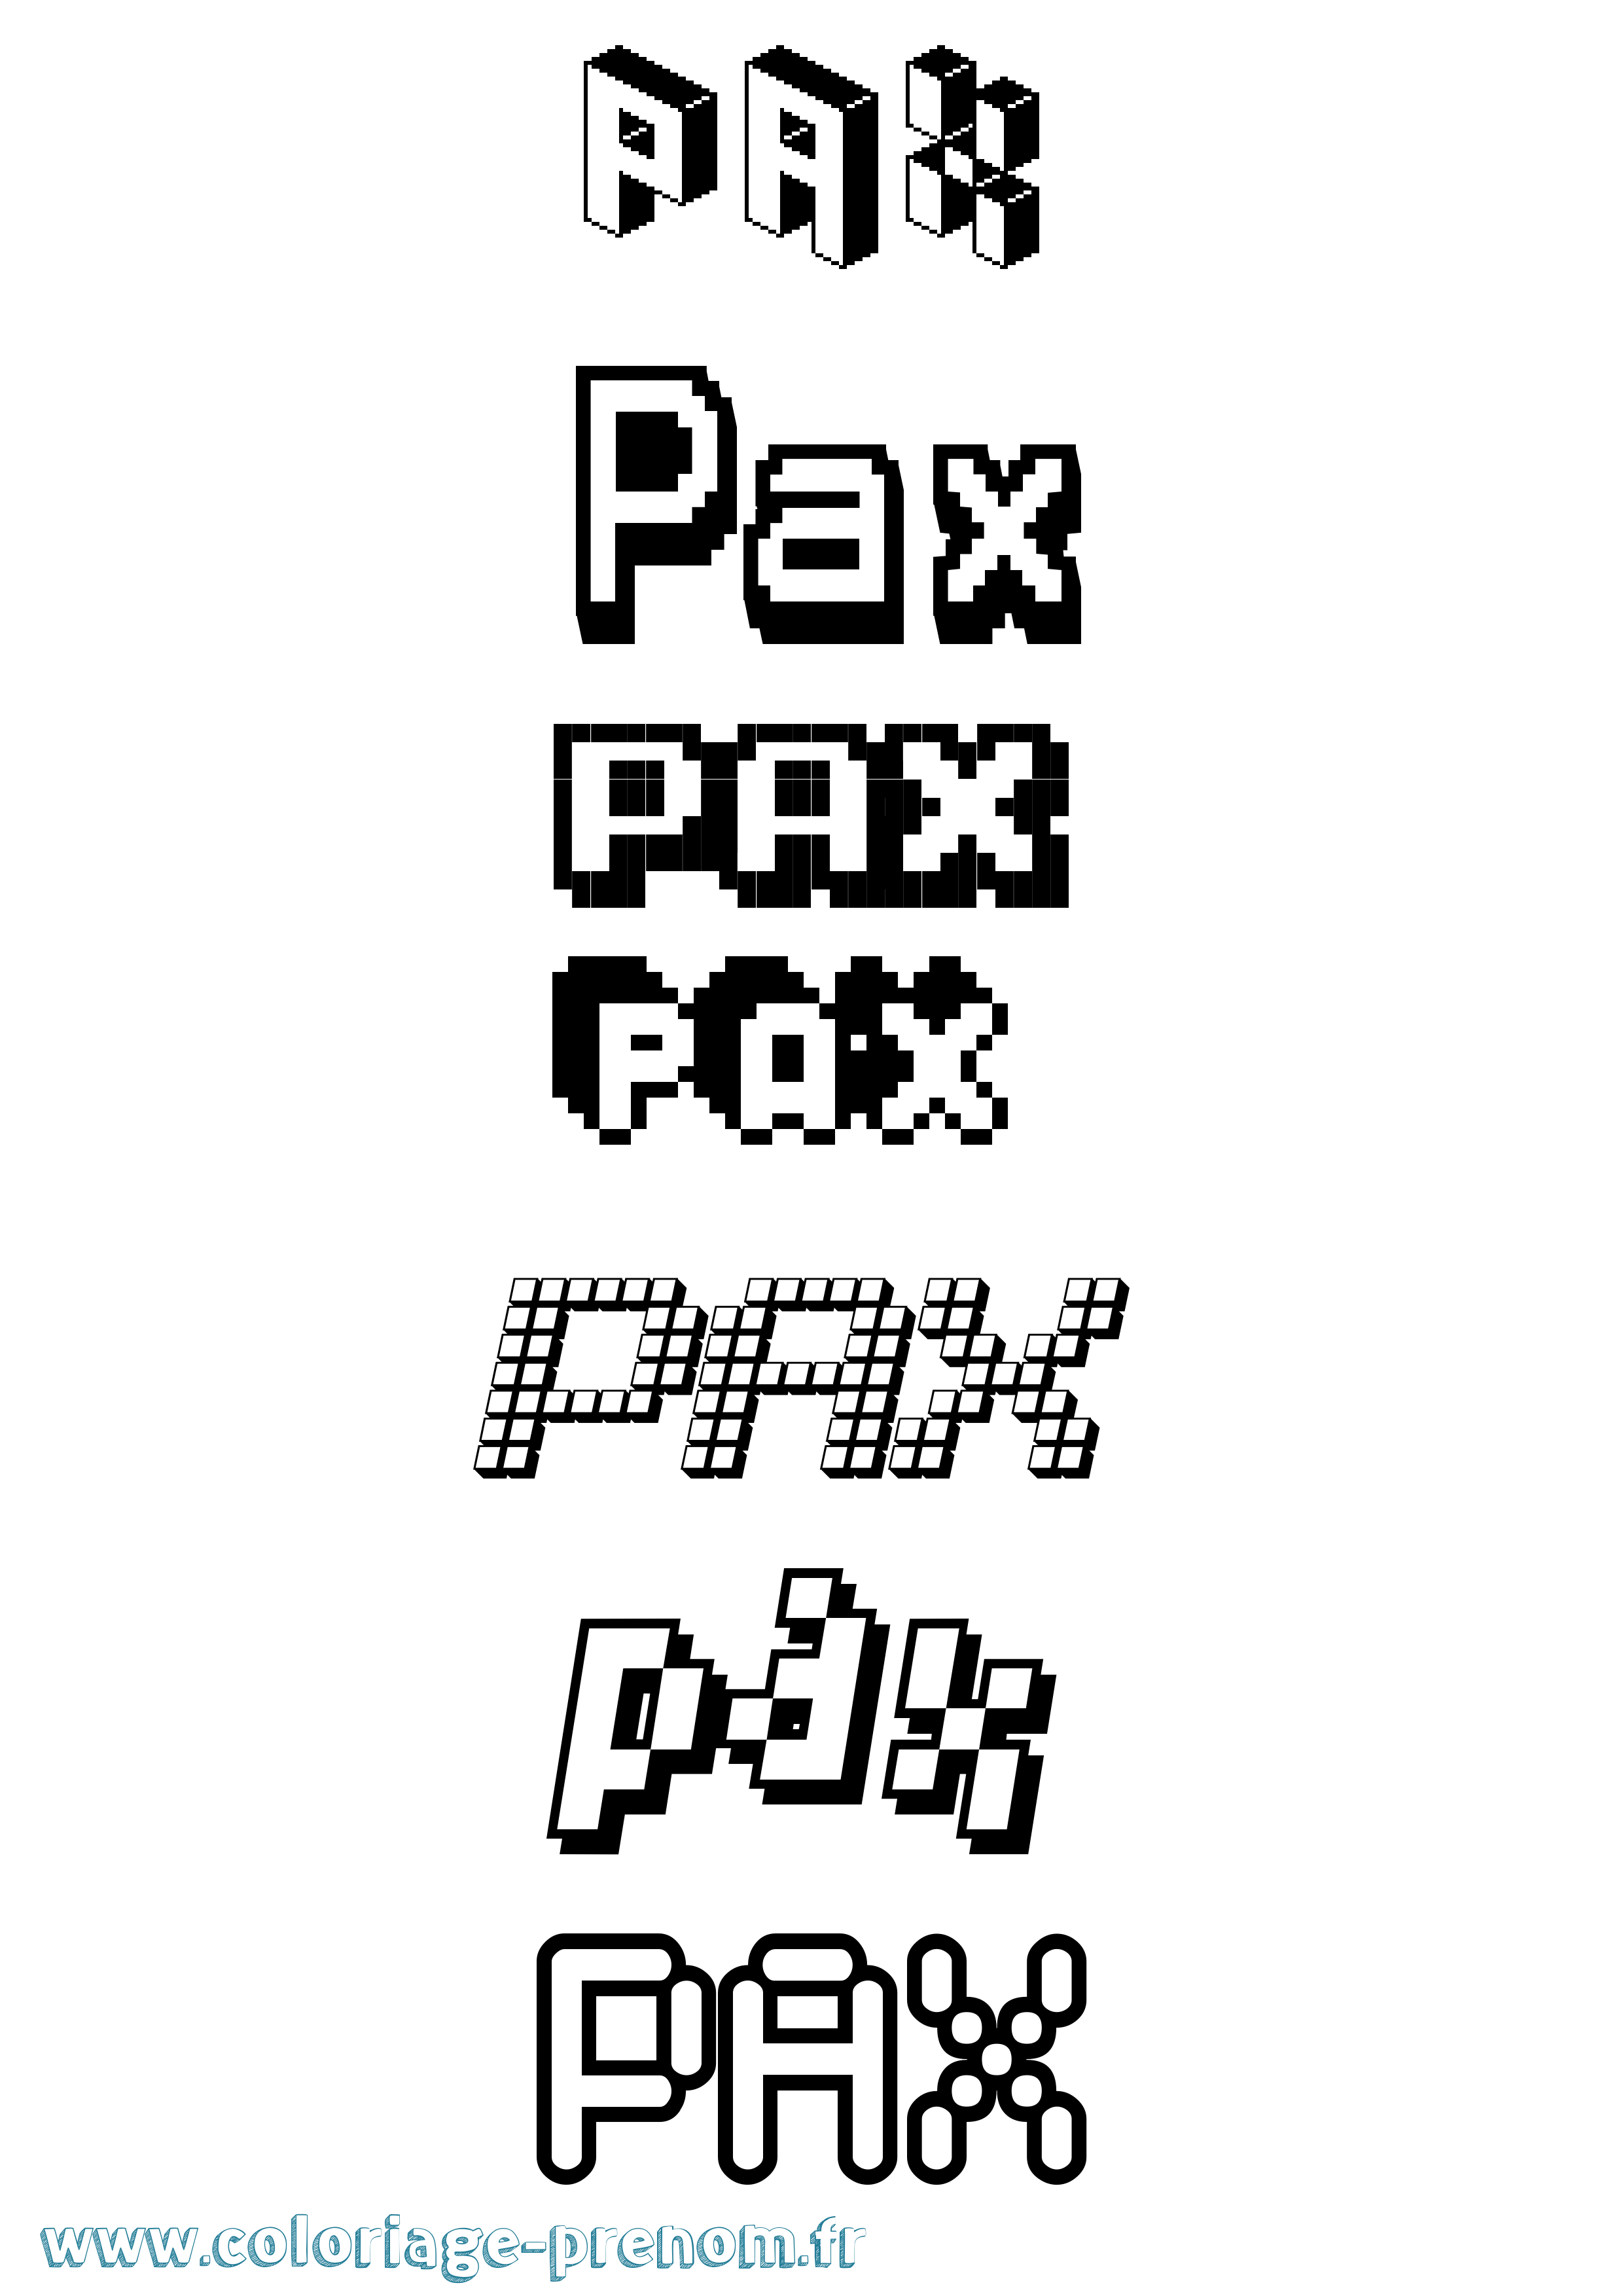 Coloriage prénom Pax Pixel